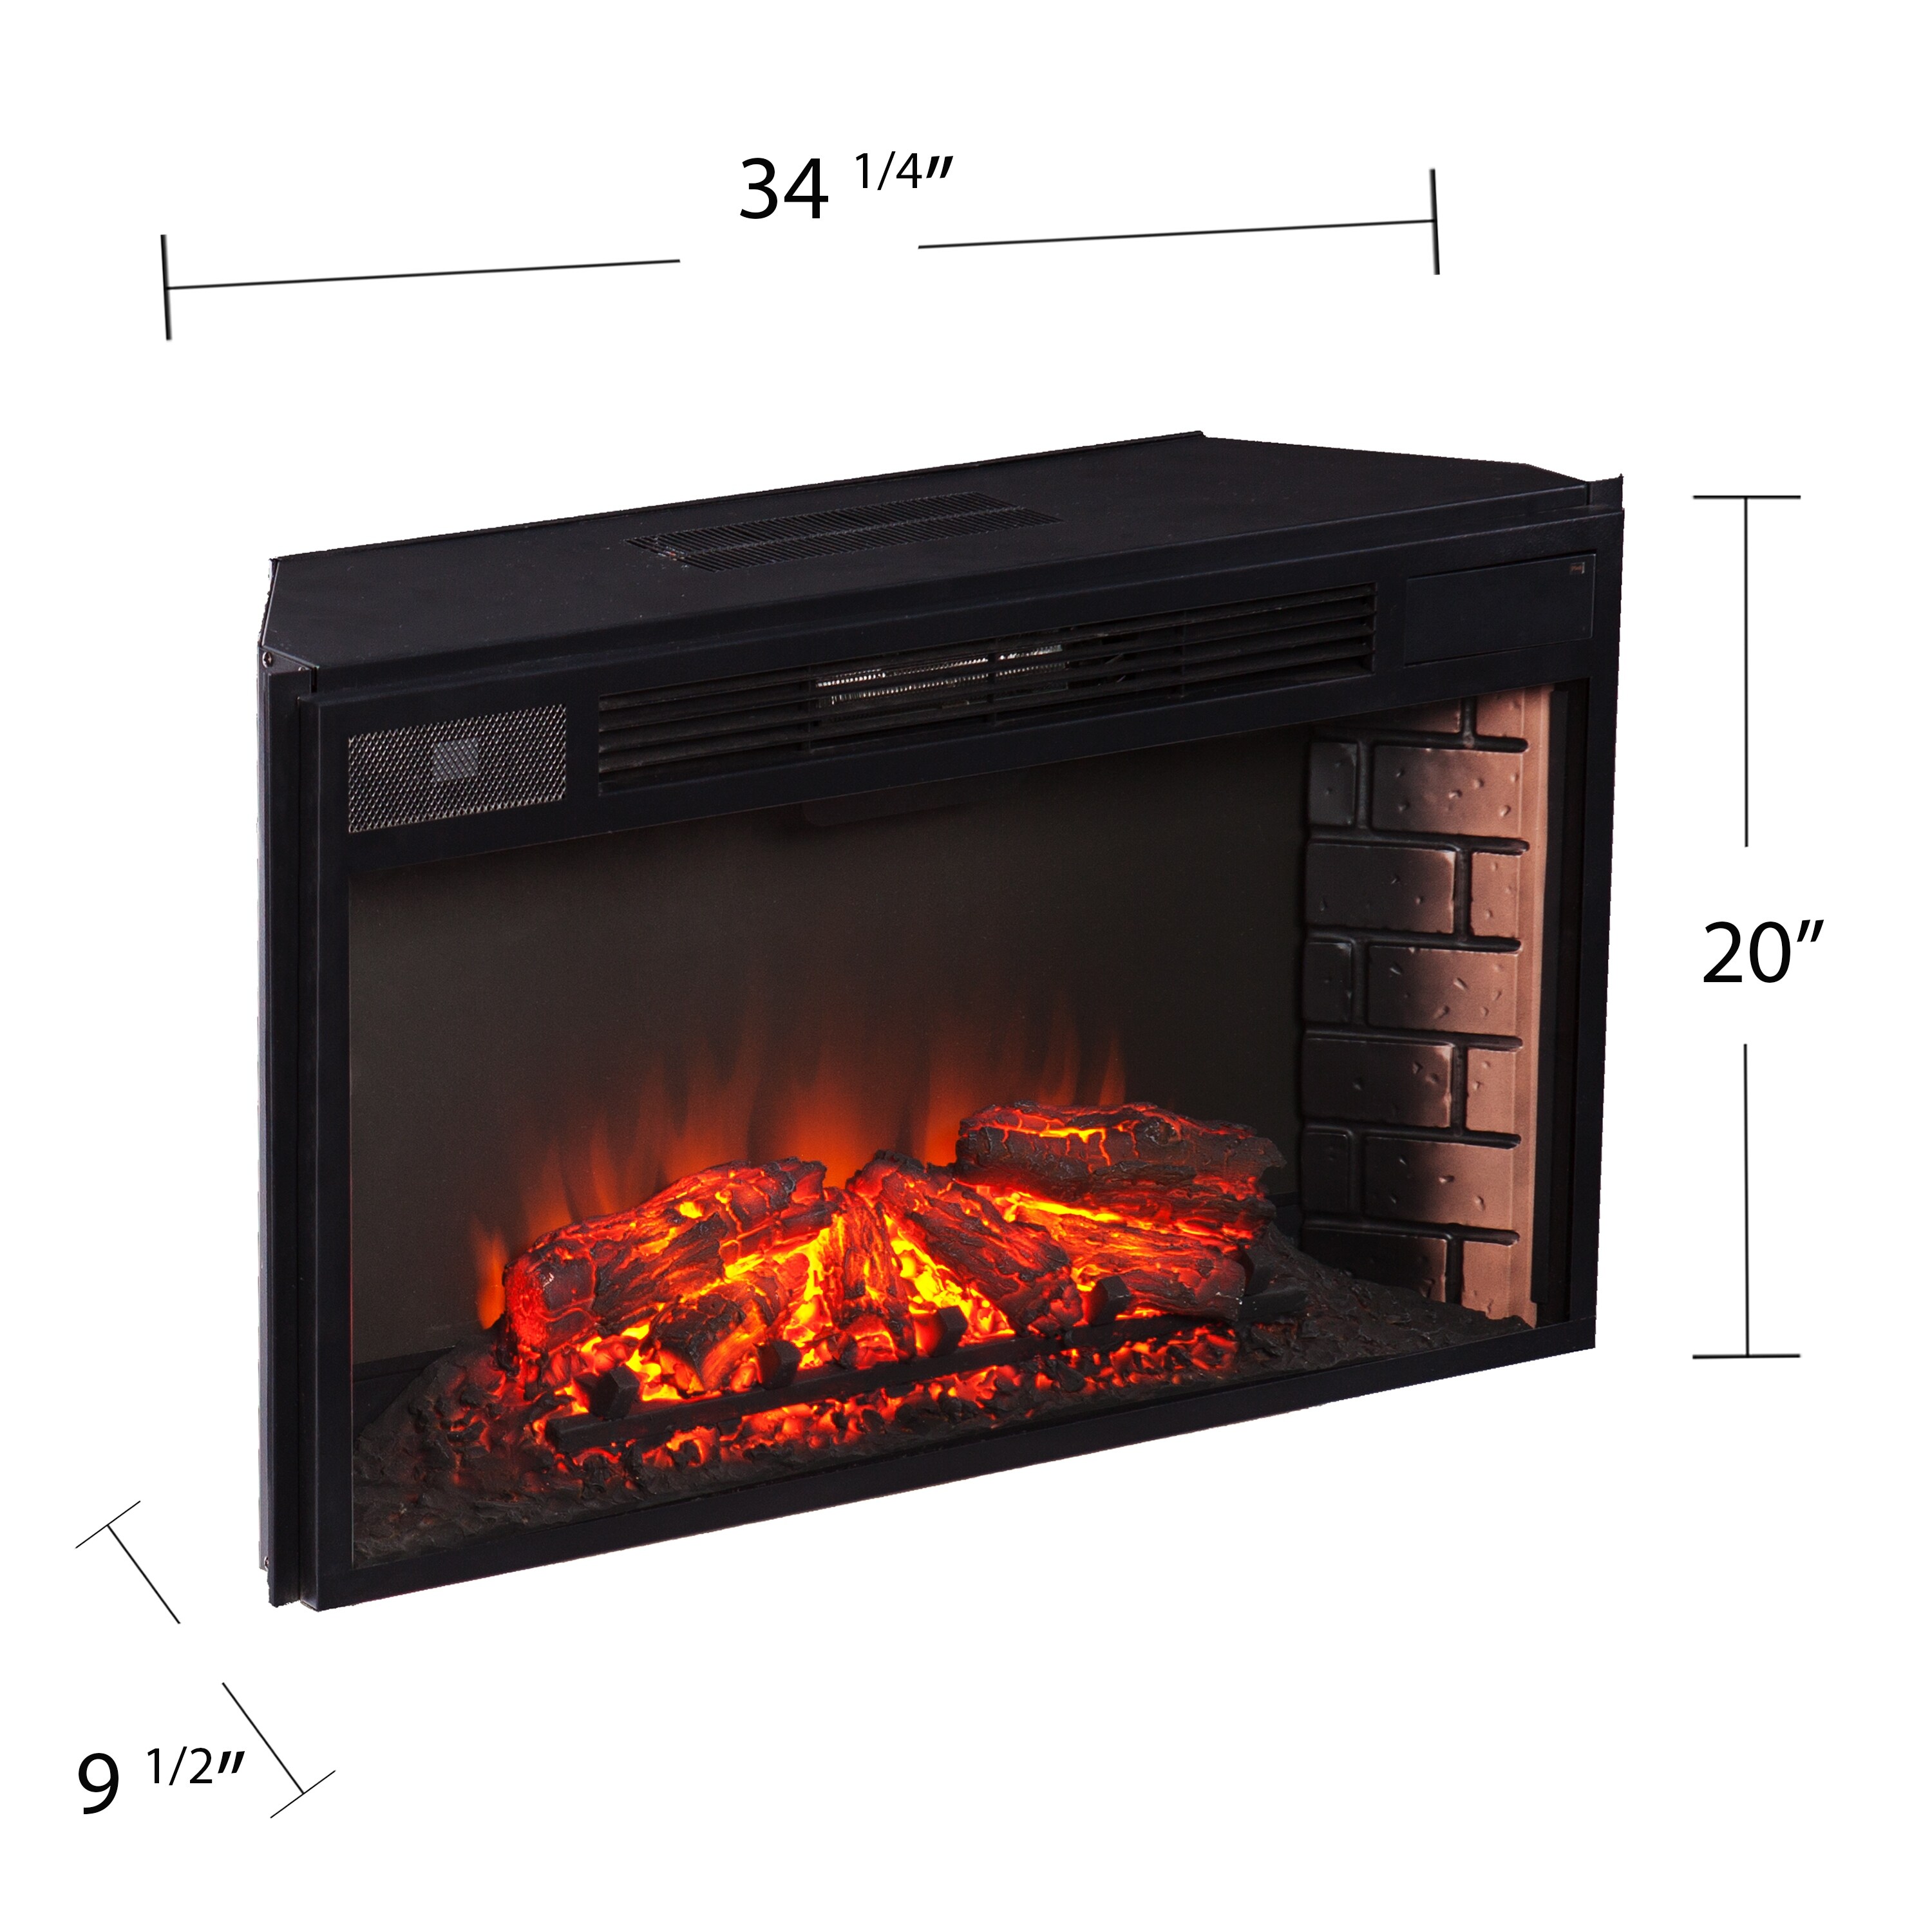 SEI Furniture 33" Widescreen Electric Firebox w/ Remote Control